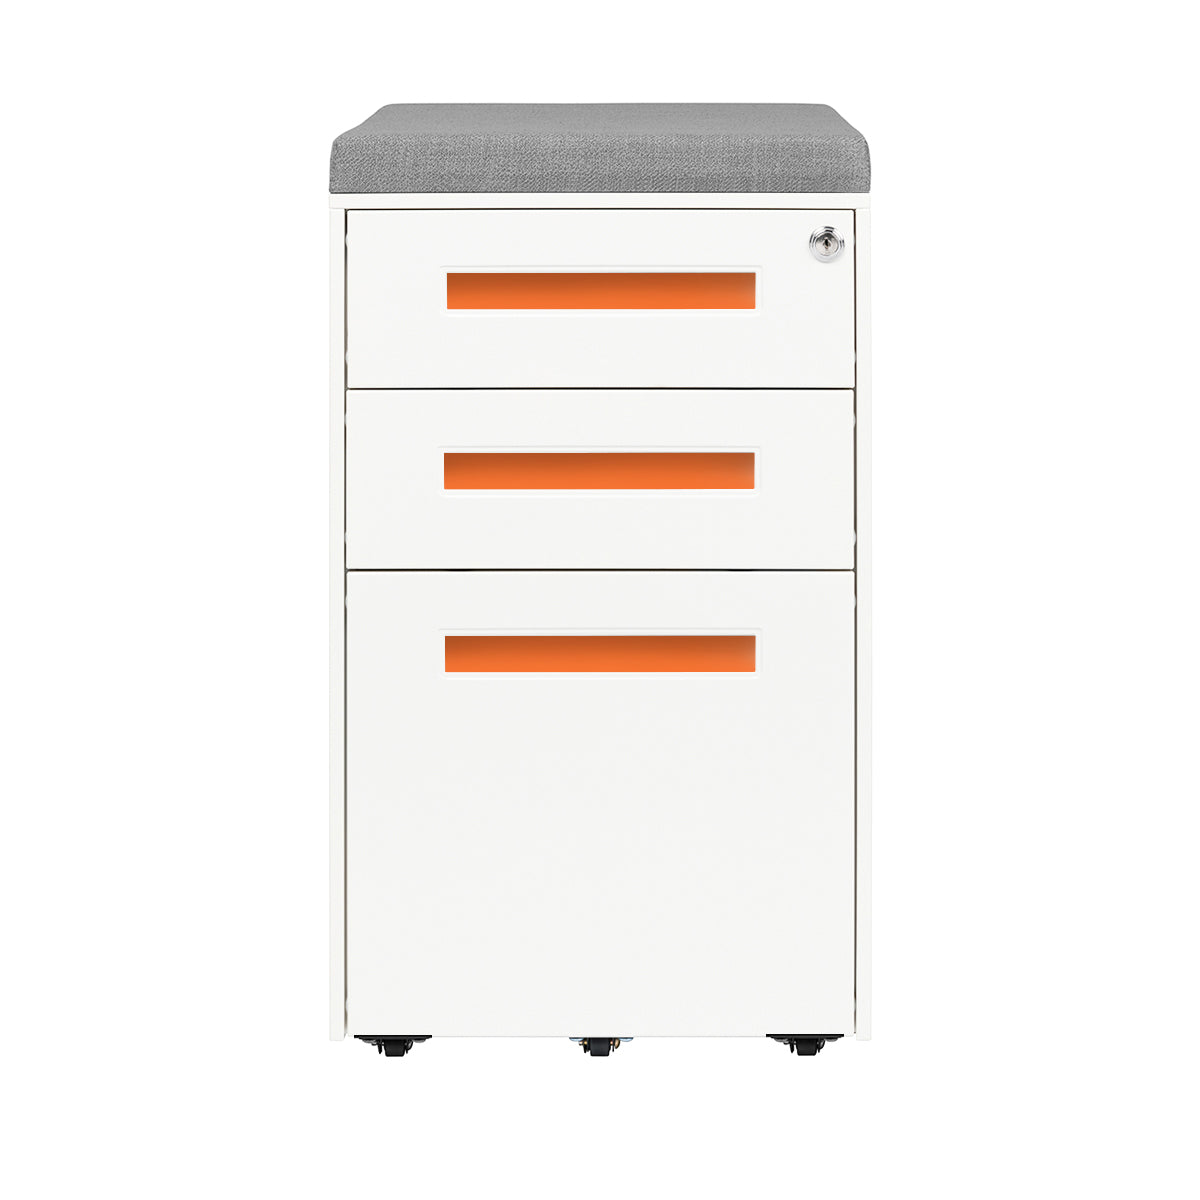 Stockpile Square Seat File Cabinet (Orange)